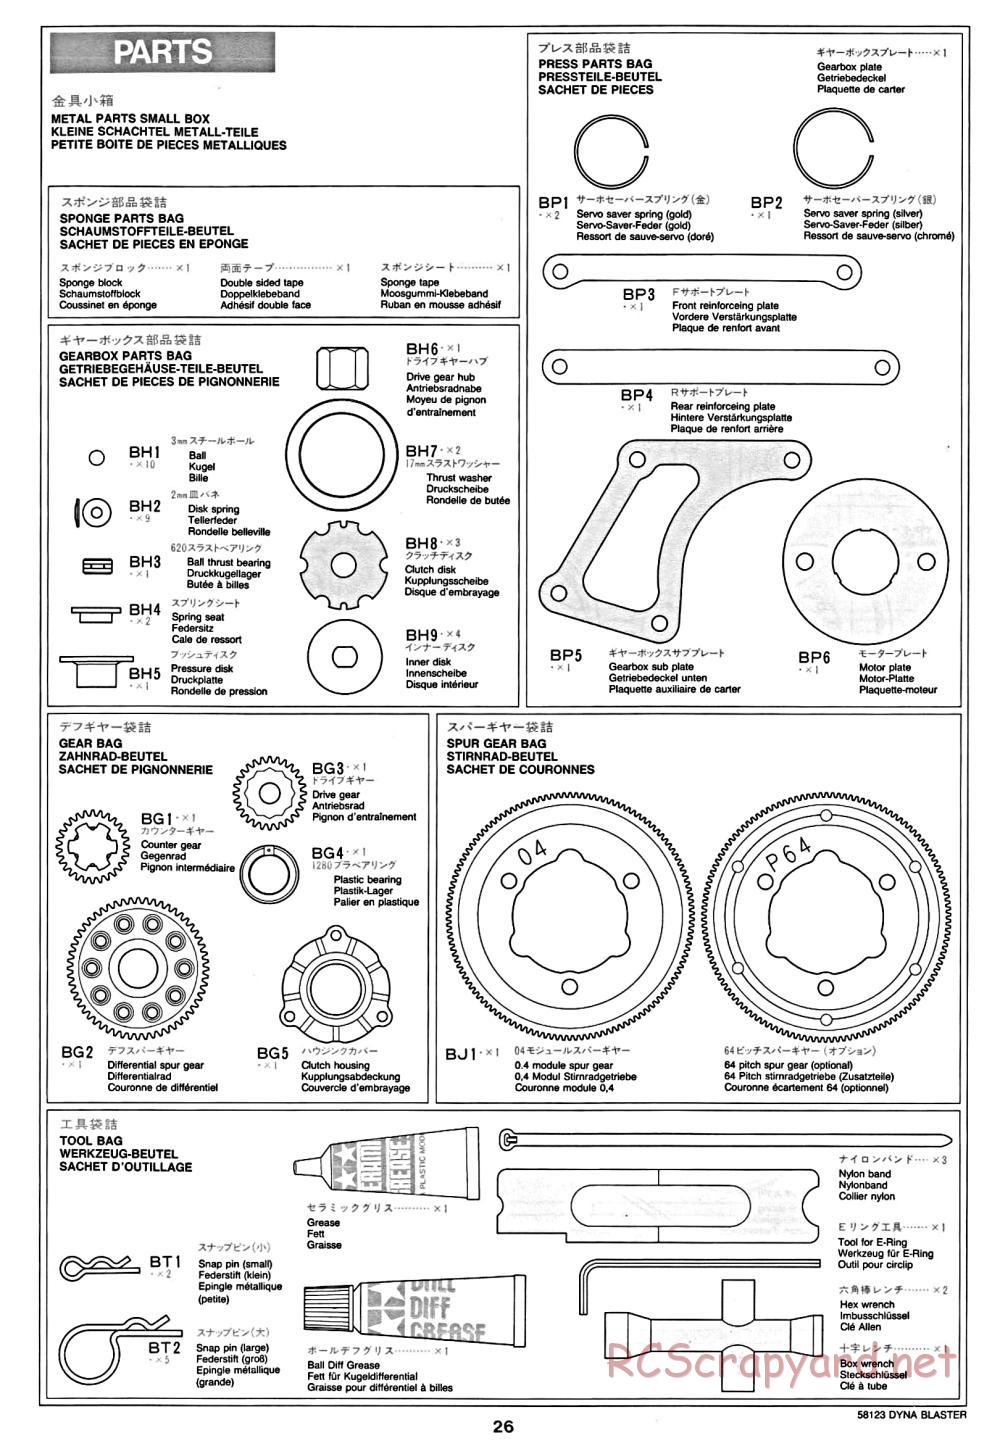 Tamiya - Dyna Blaster Chassis - Manual - Page 26